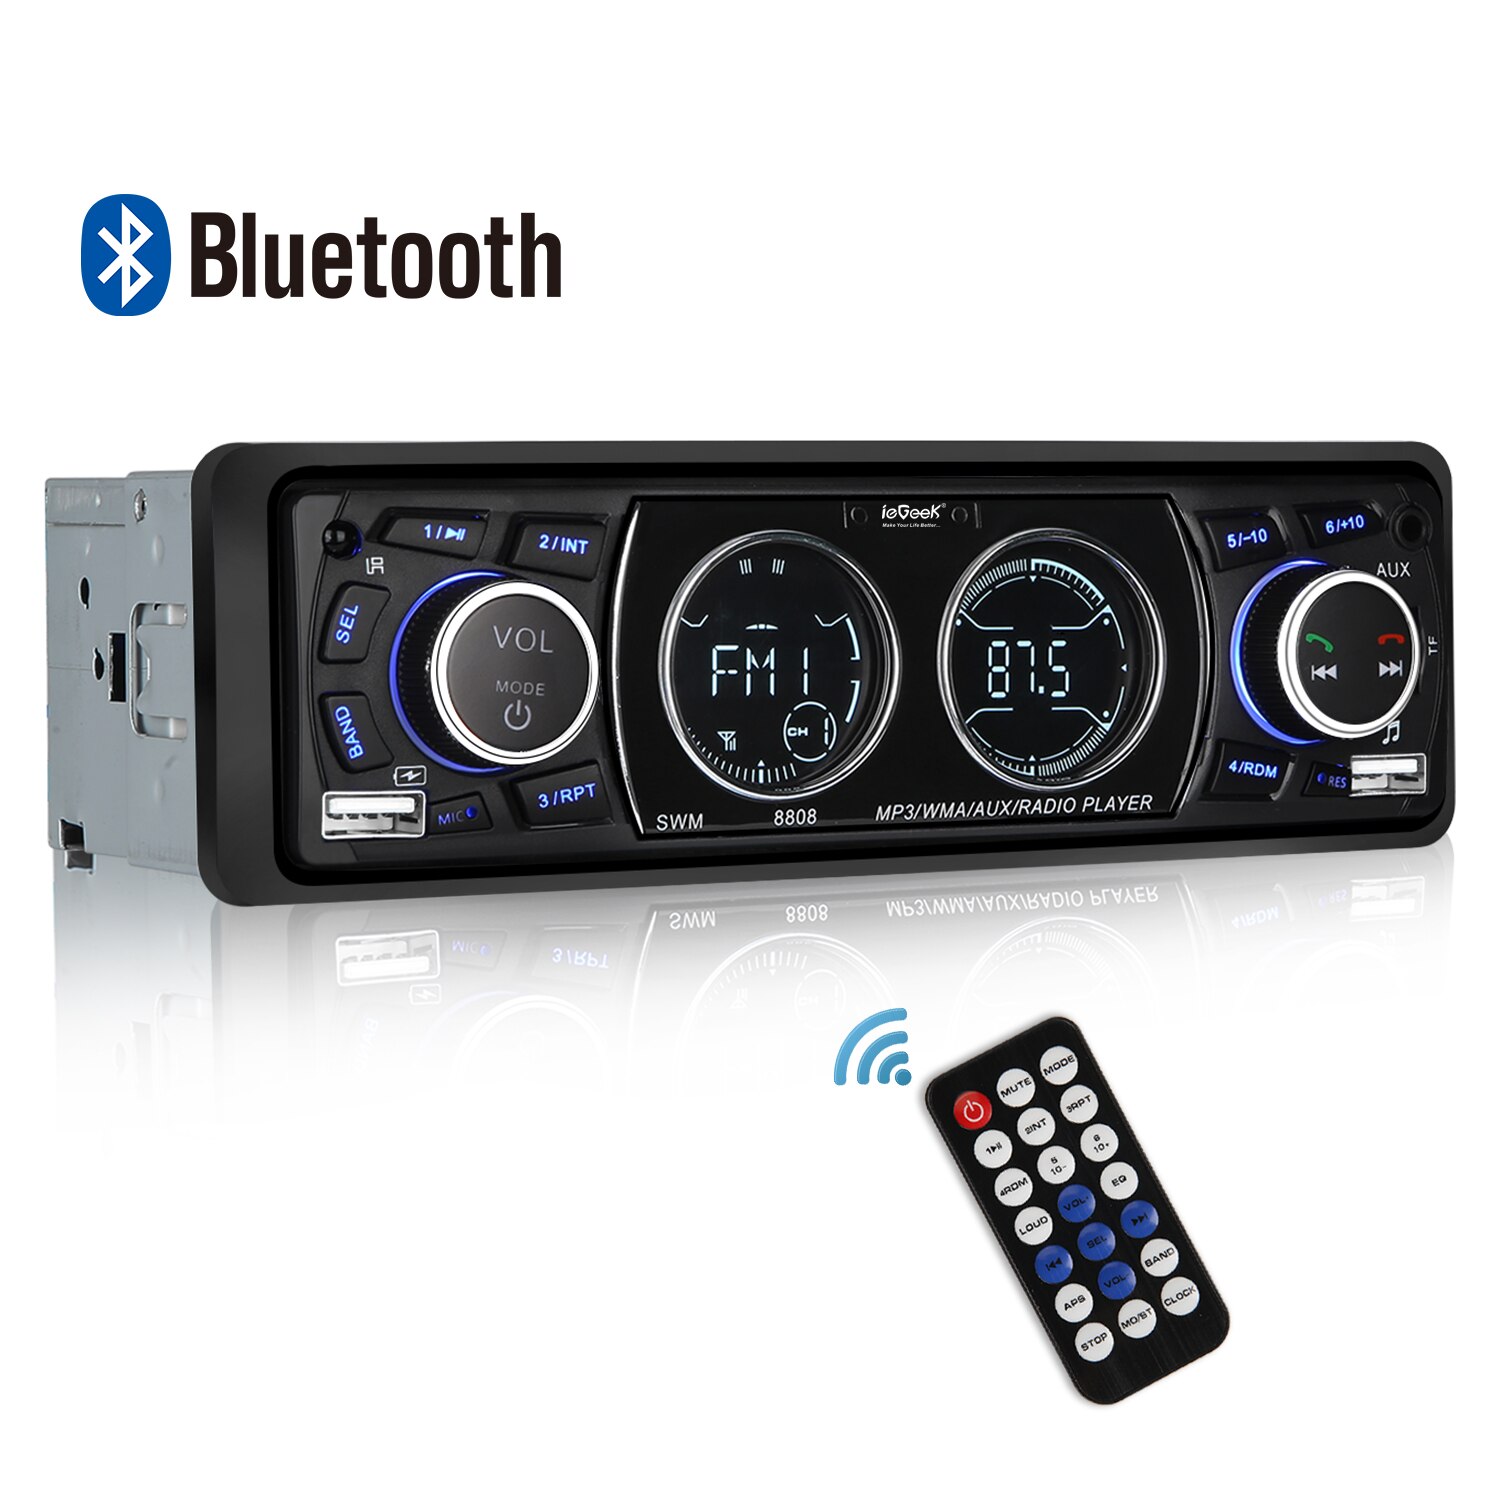 Bluetooth Auto Speler Fm Radio Lcd-scherm Stereo MP3 Speler 1DIN In-Dash Car Audio Muziek Dual Usb Sd aux Handsfree Bellen